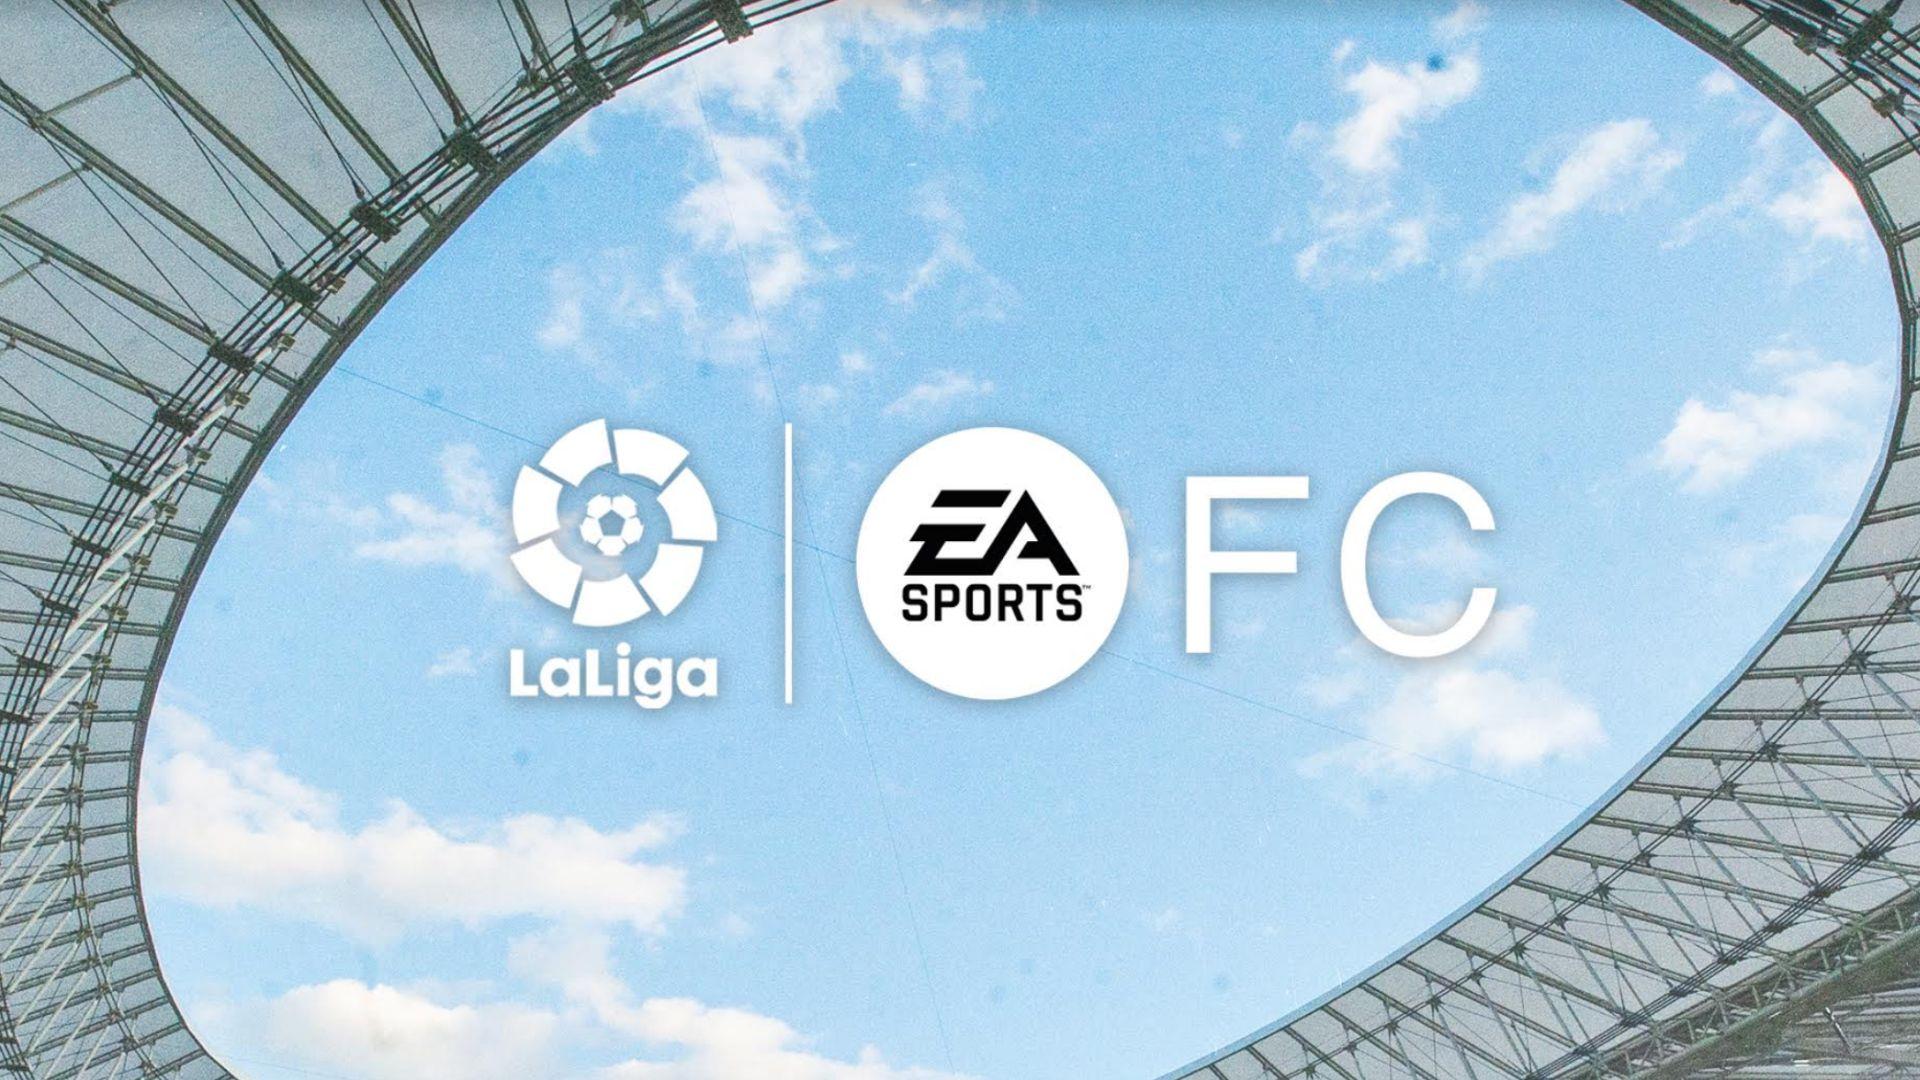 EA SPORTS logo with La Liga logo